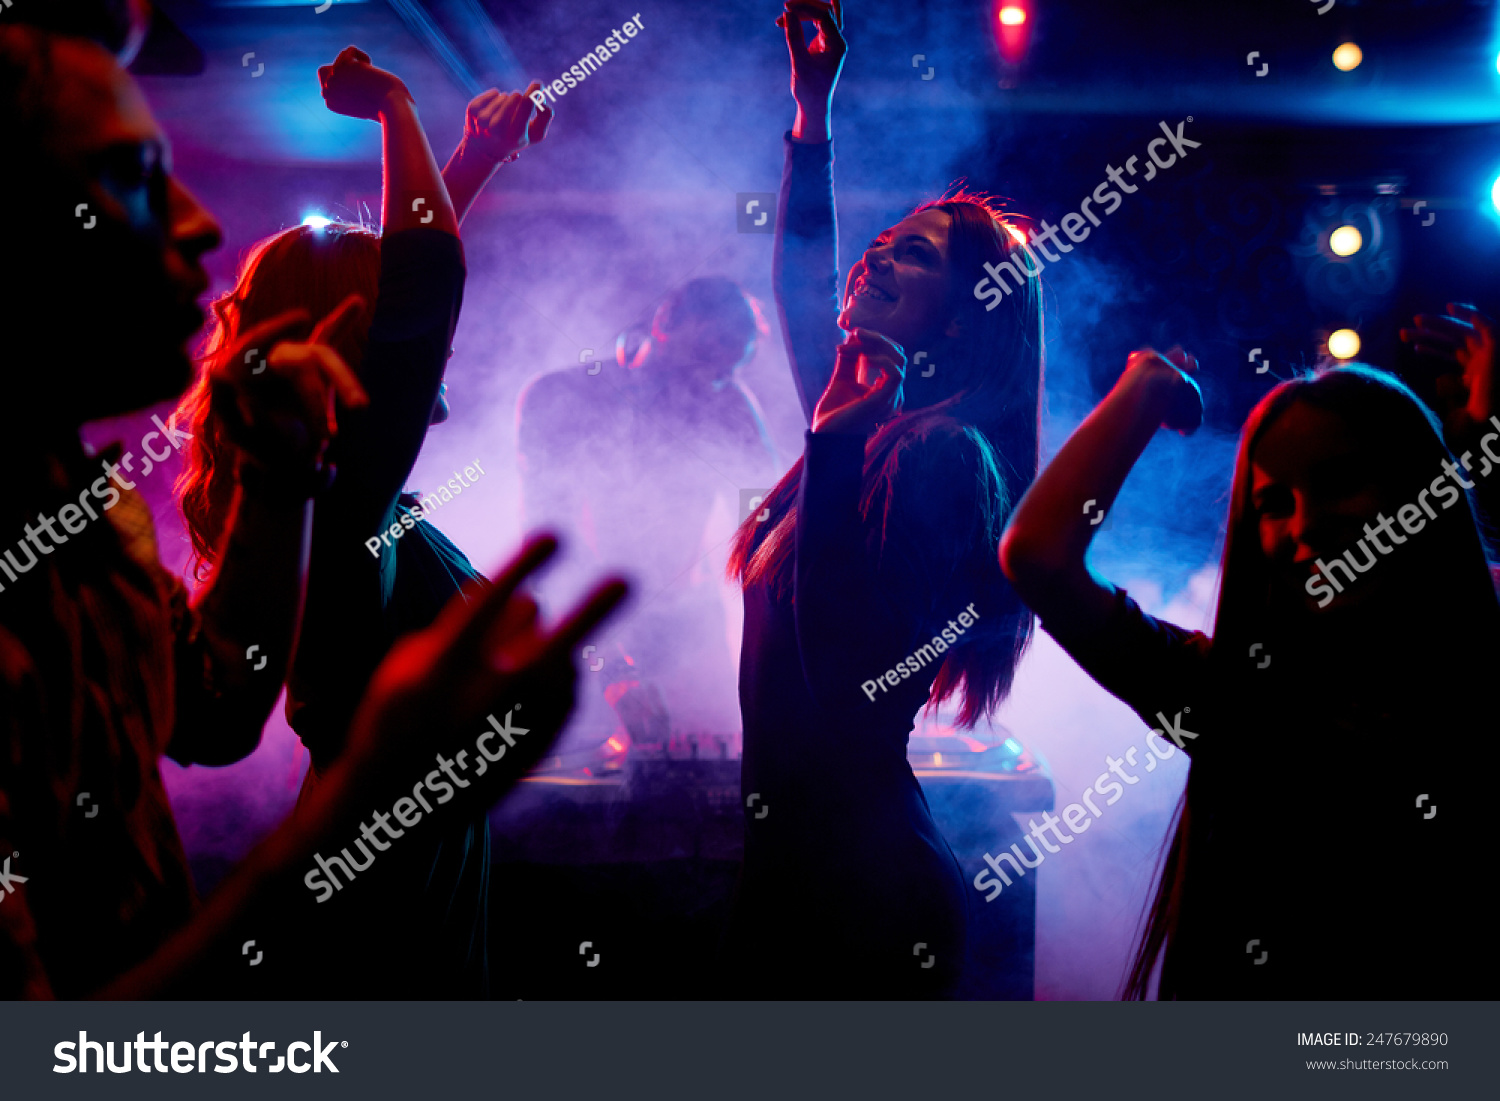 Group of dancing young people enjoying night in club #247679890